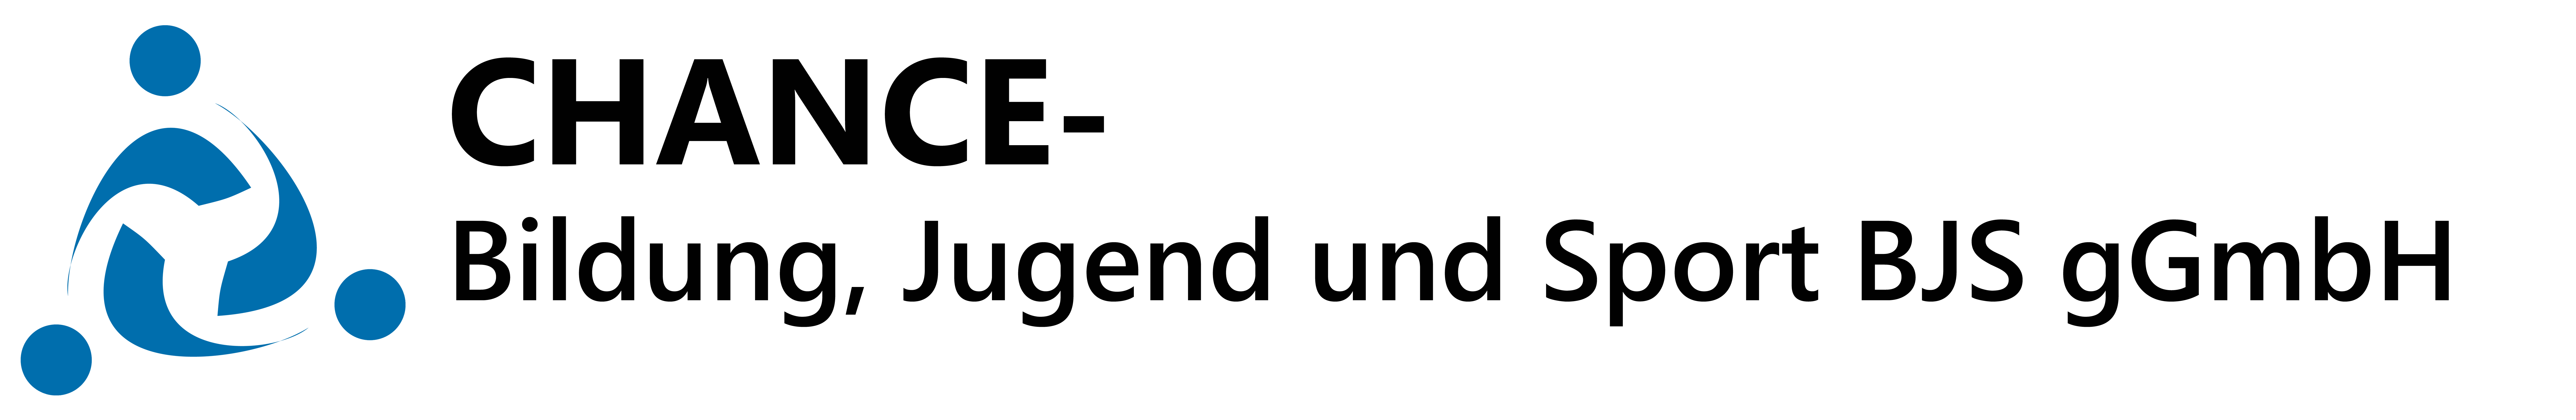 2018 logo Schrift3 1487x9115blau trans